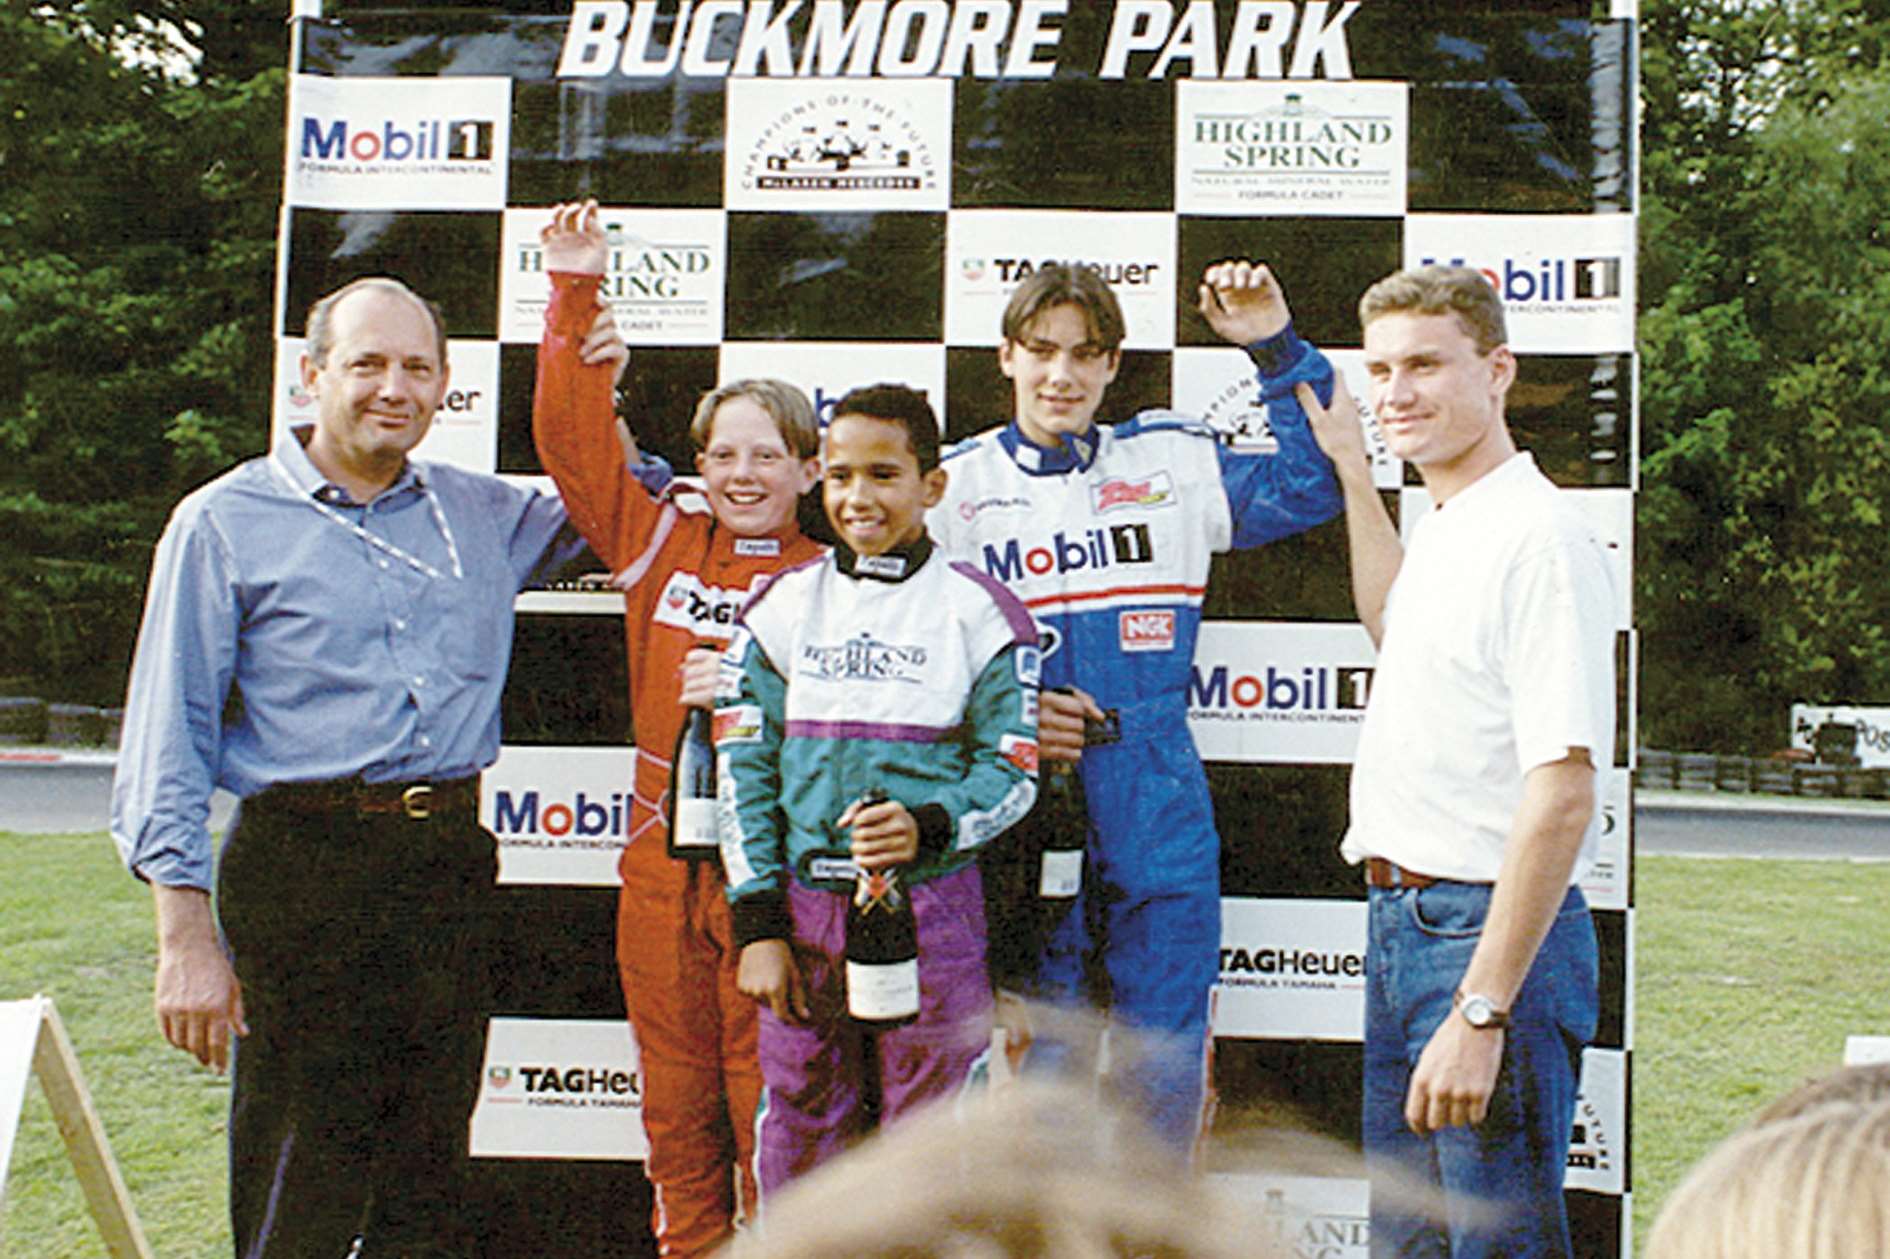 Lewis Hamilton at Buckmore Park in 1996